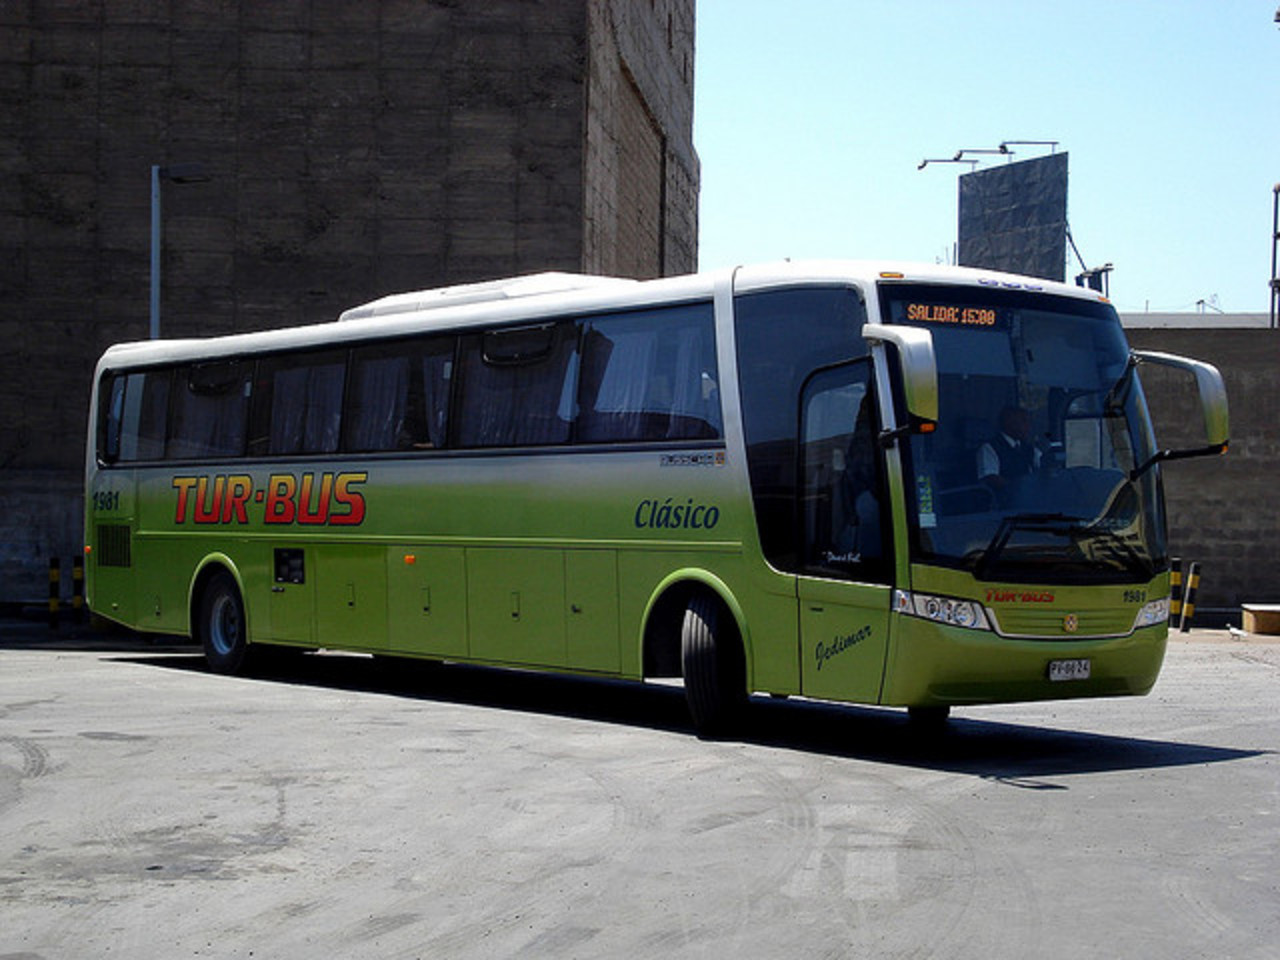 Busscar VisstaBuss Lo / M.Benz 0400RSE / Tur - Bus | Flickr ...